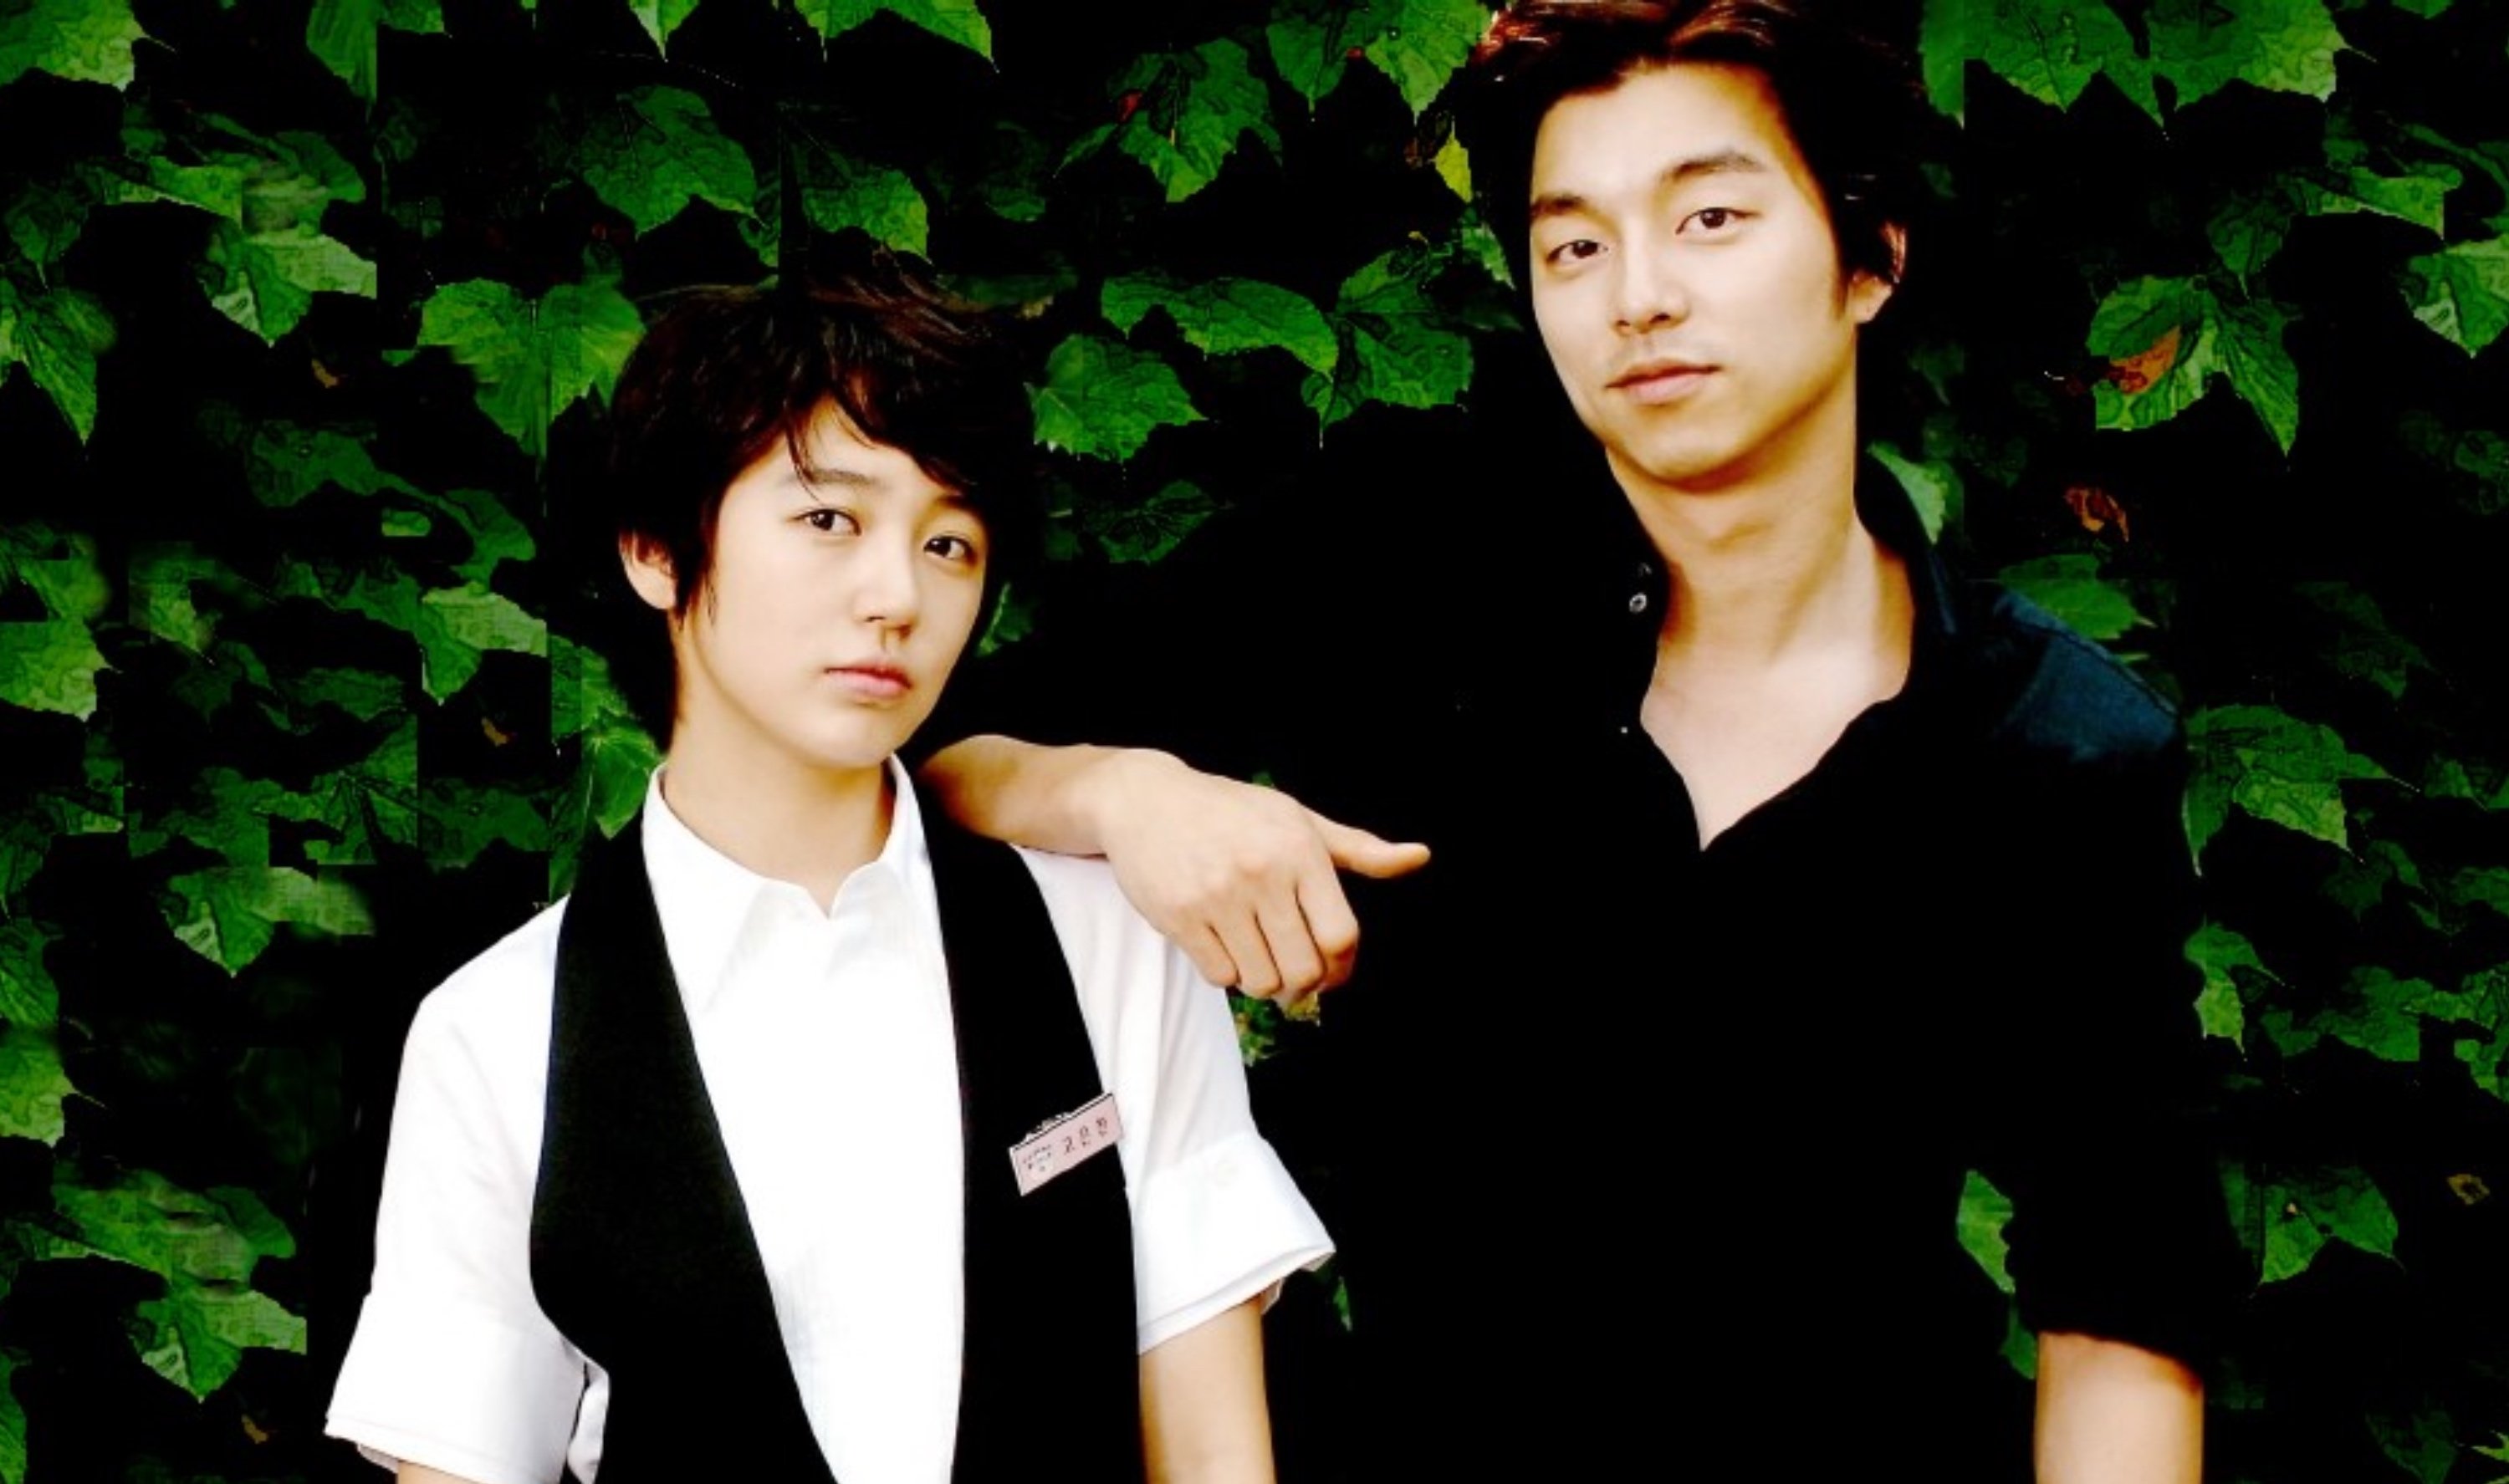 Actors Yoon Eun-hye and Gong Yoo for 'Coffee Prince' gender-bending K-drama wearing black and white dress shirt